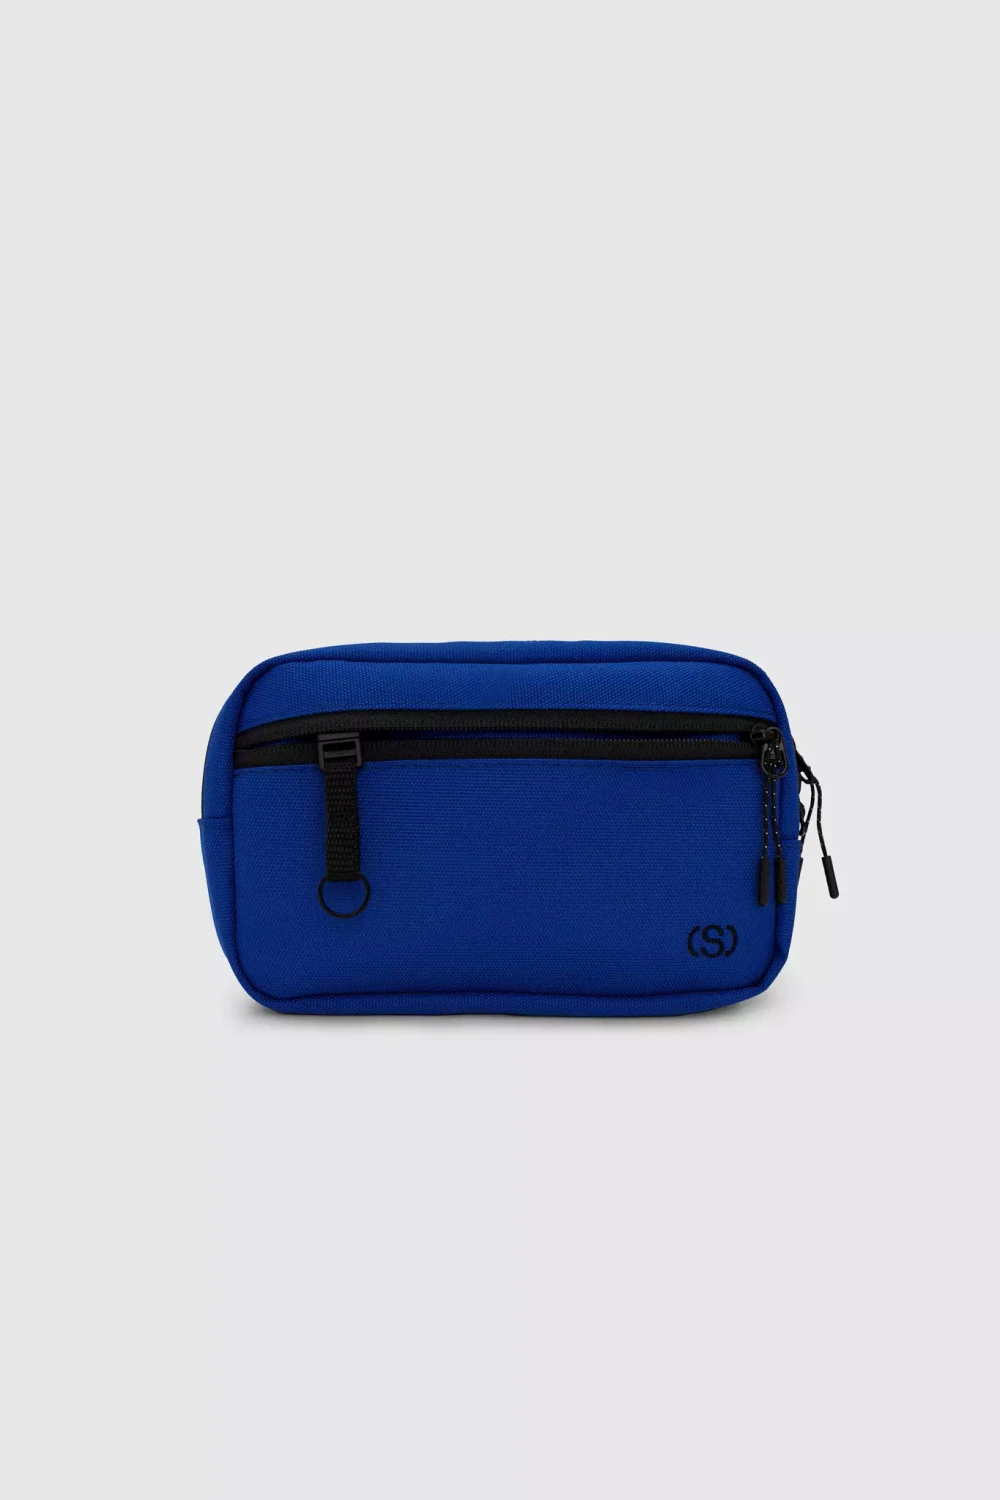 Поясная сумка (INGE) Electric blue